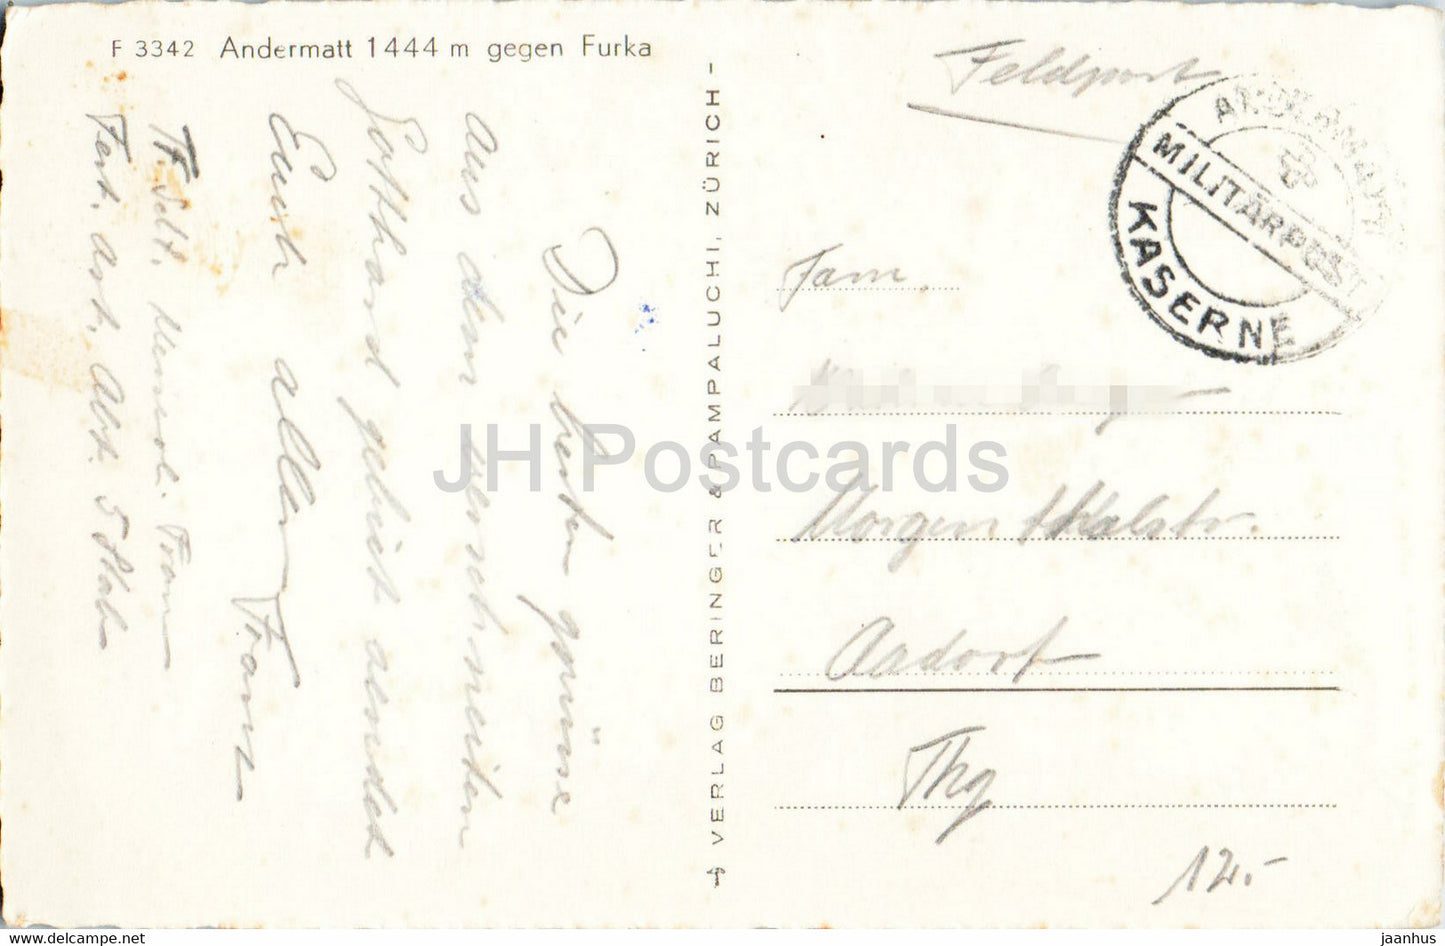 Andermatt 1444 m gegen Furka - 3342 - Feldpost - military mail - old postcard - Switzerland - used